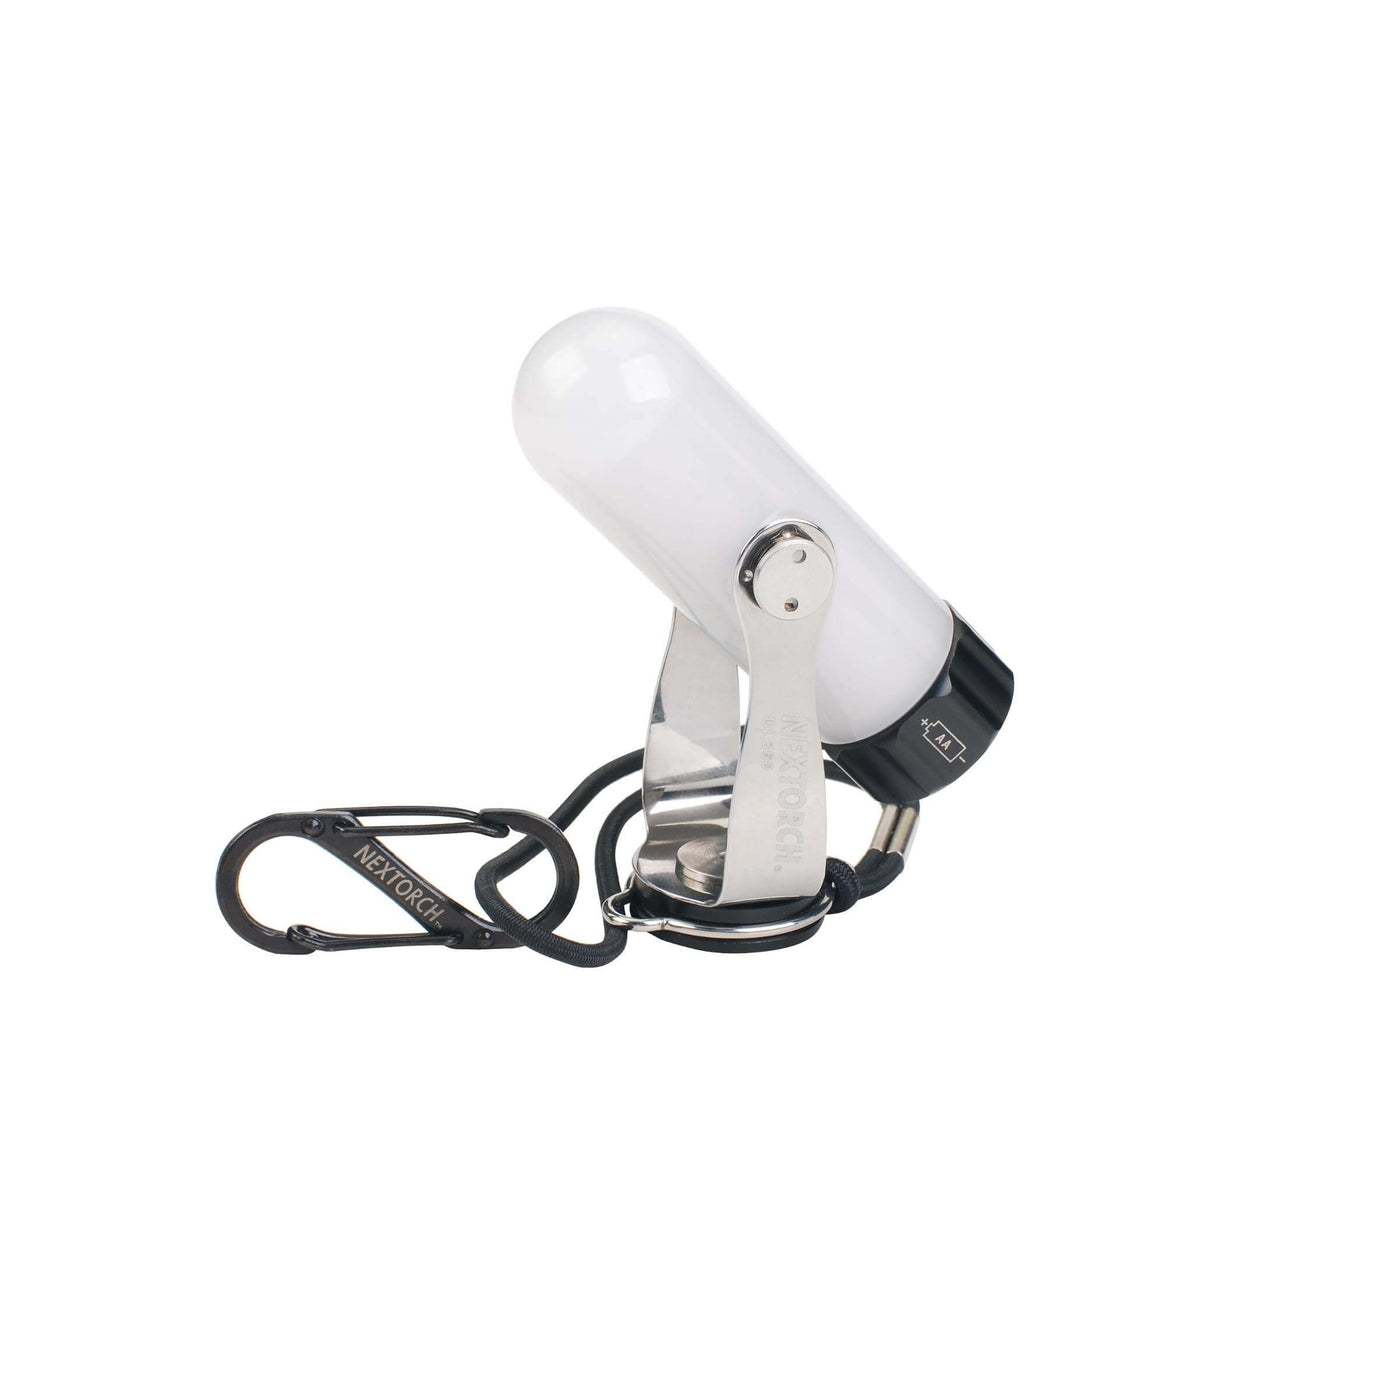 Lanterne de poche rotative UL360